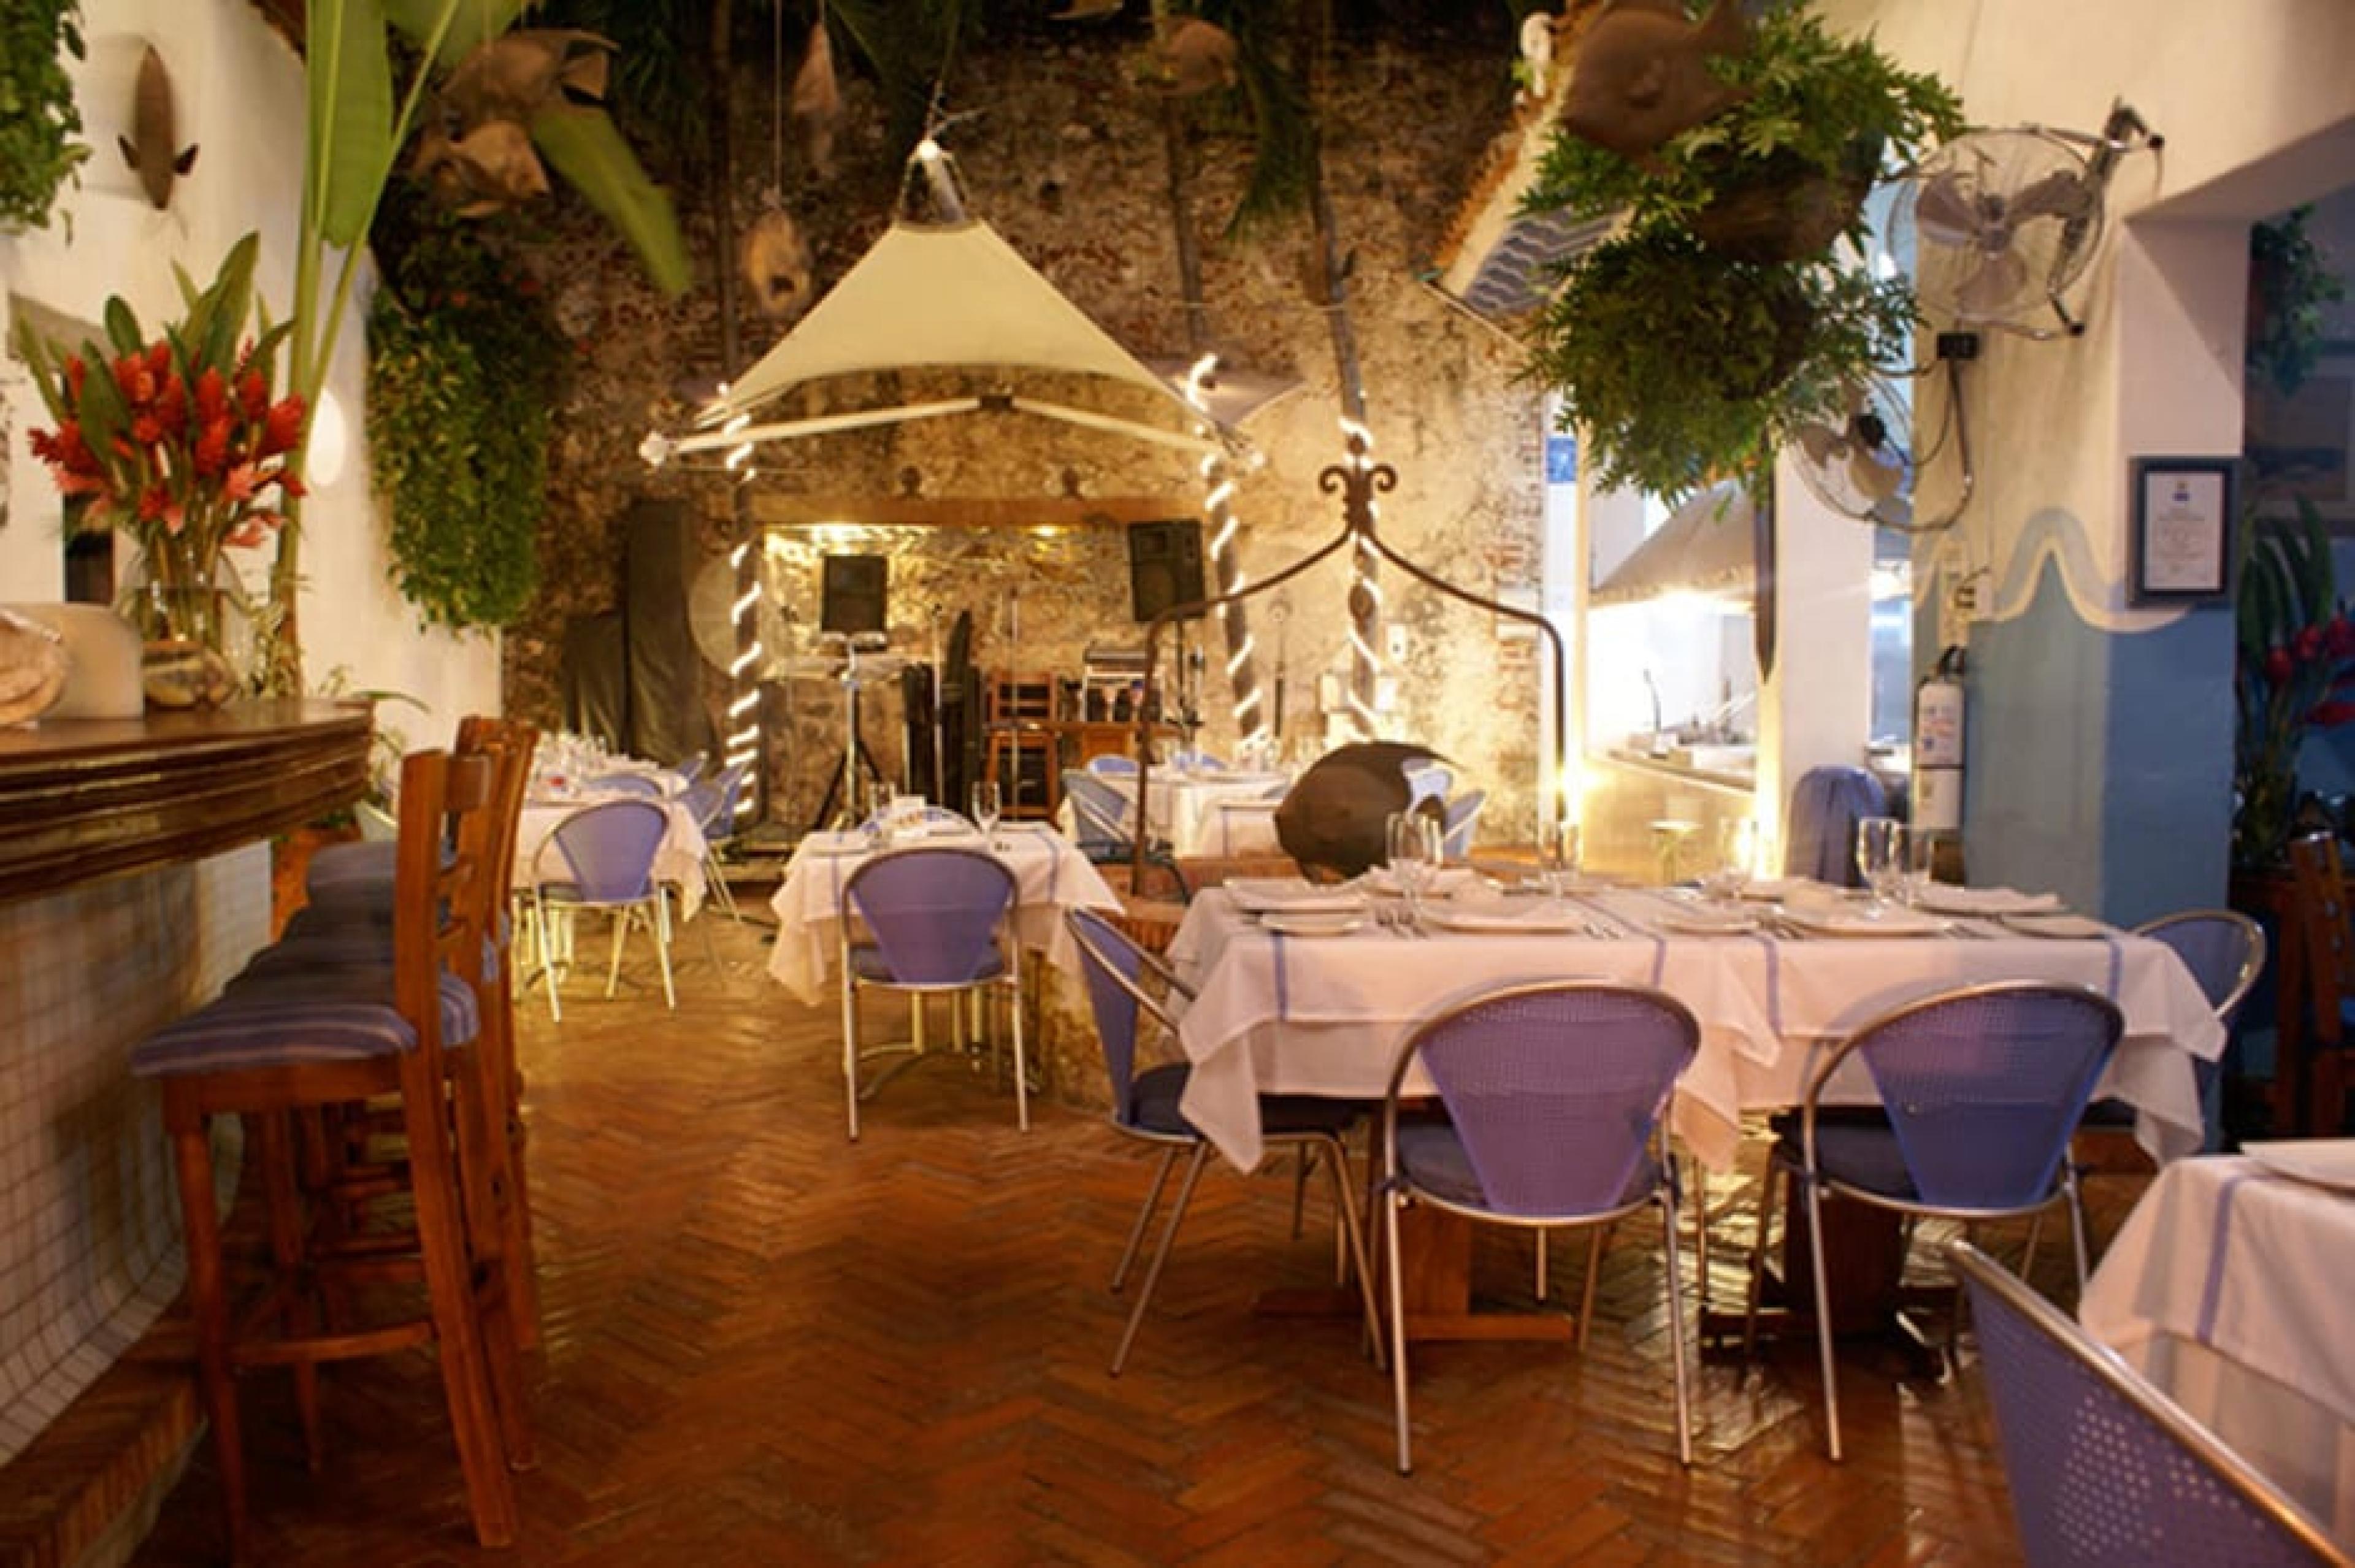 Dinning Area at Juan del Mar, Cartagena, Colombia